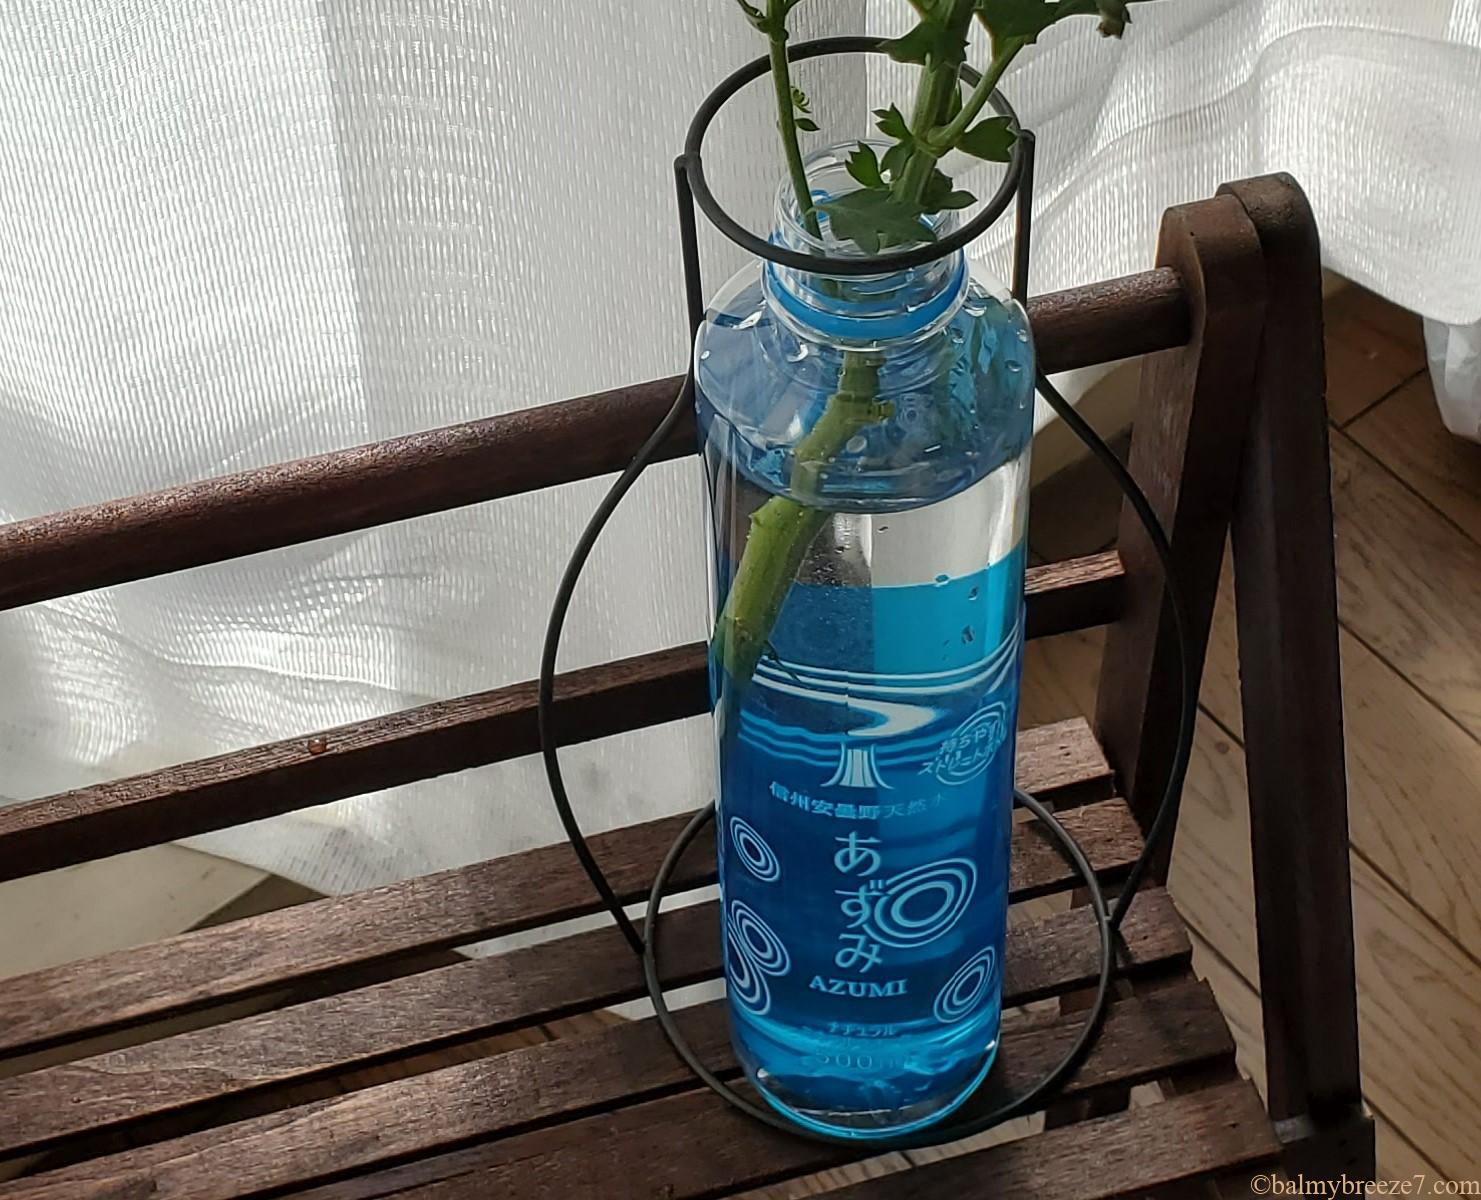 put a flower in the azumi pet bottle vase